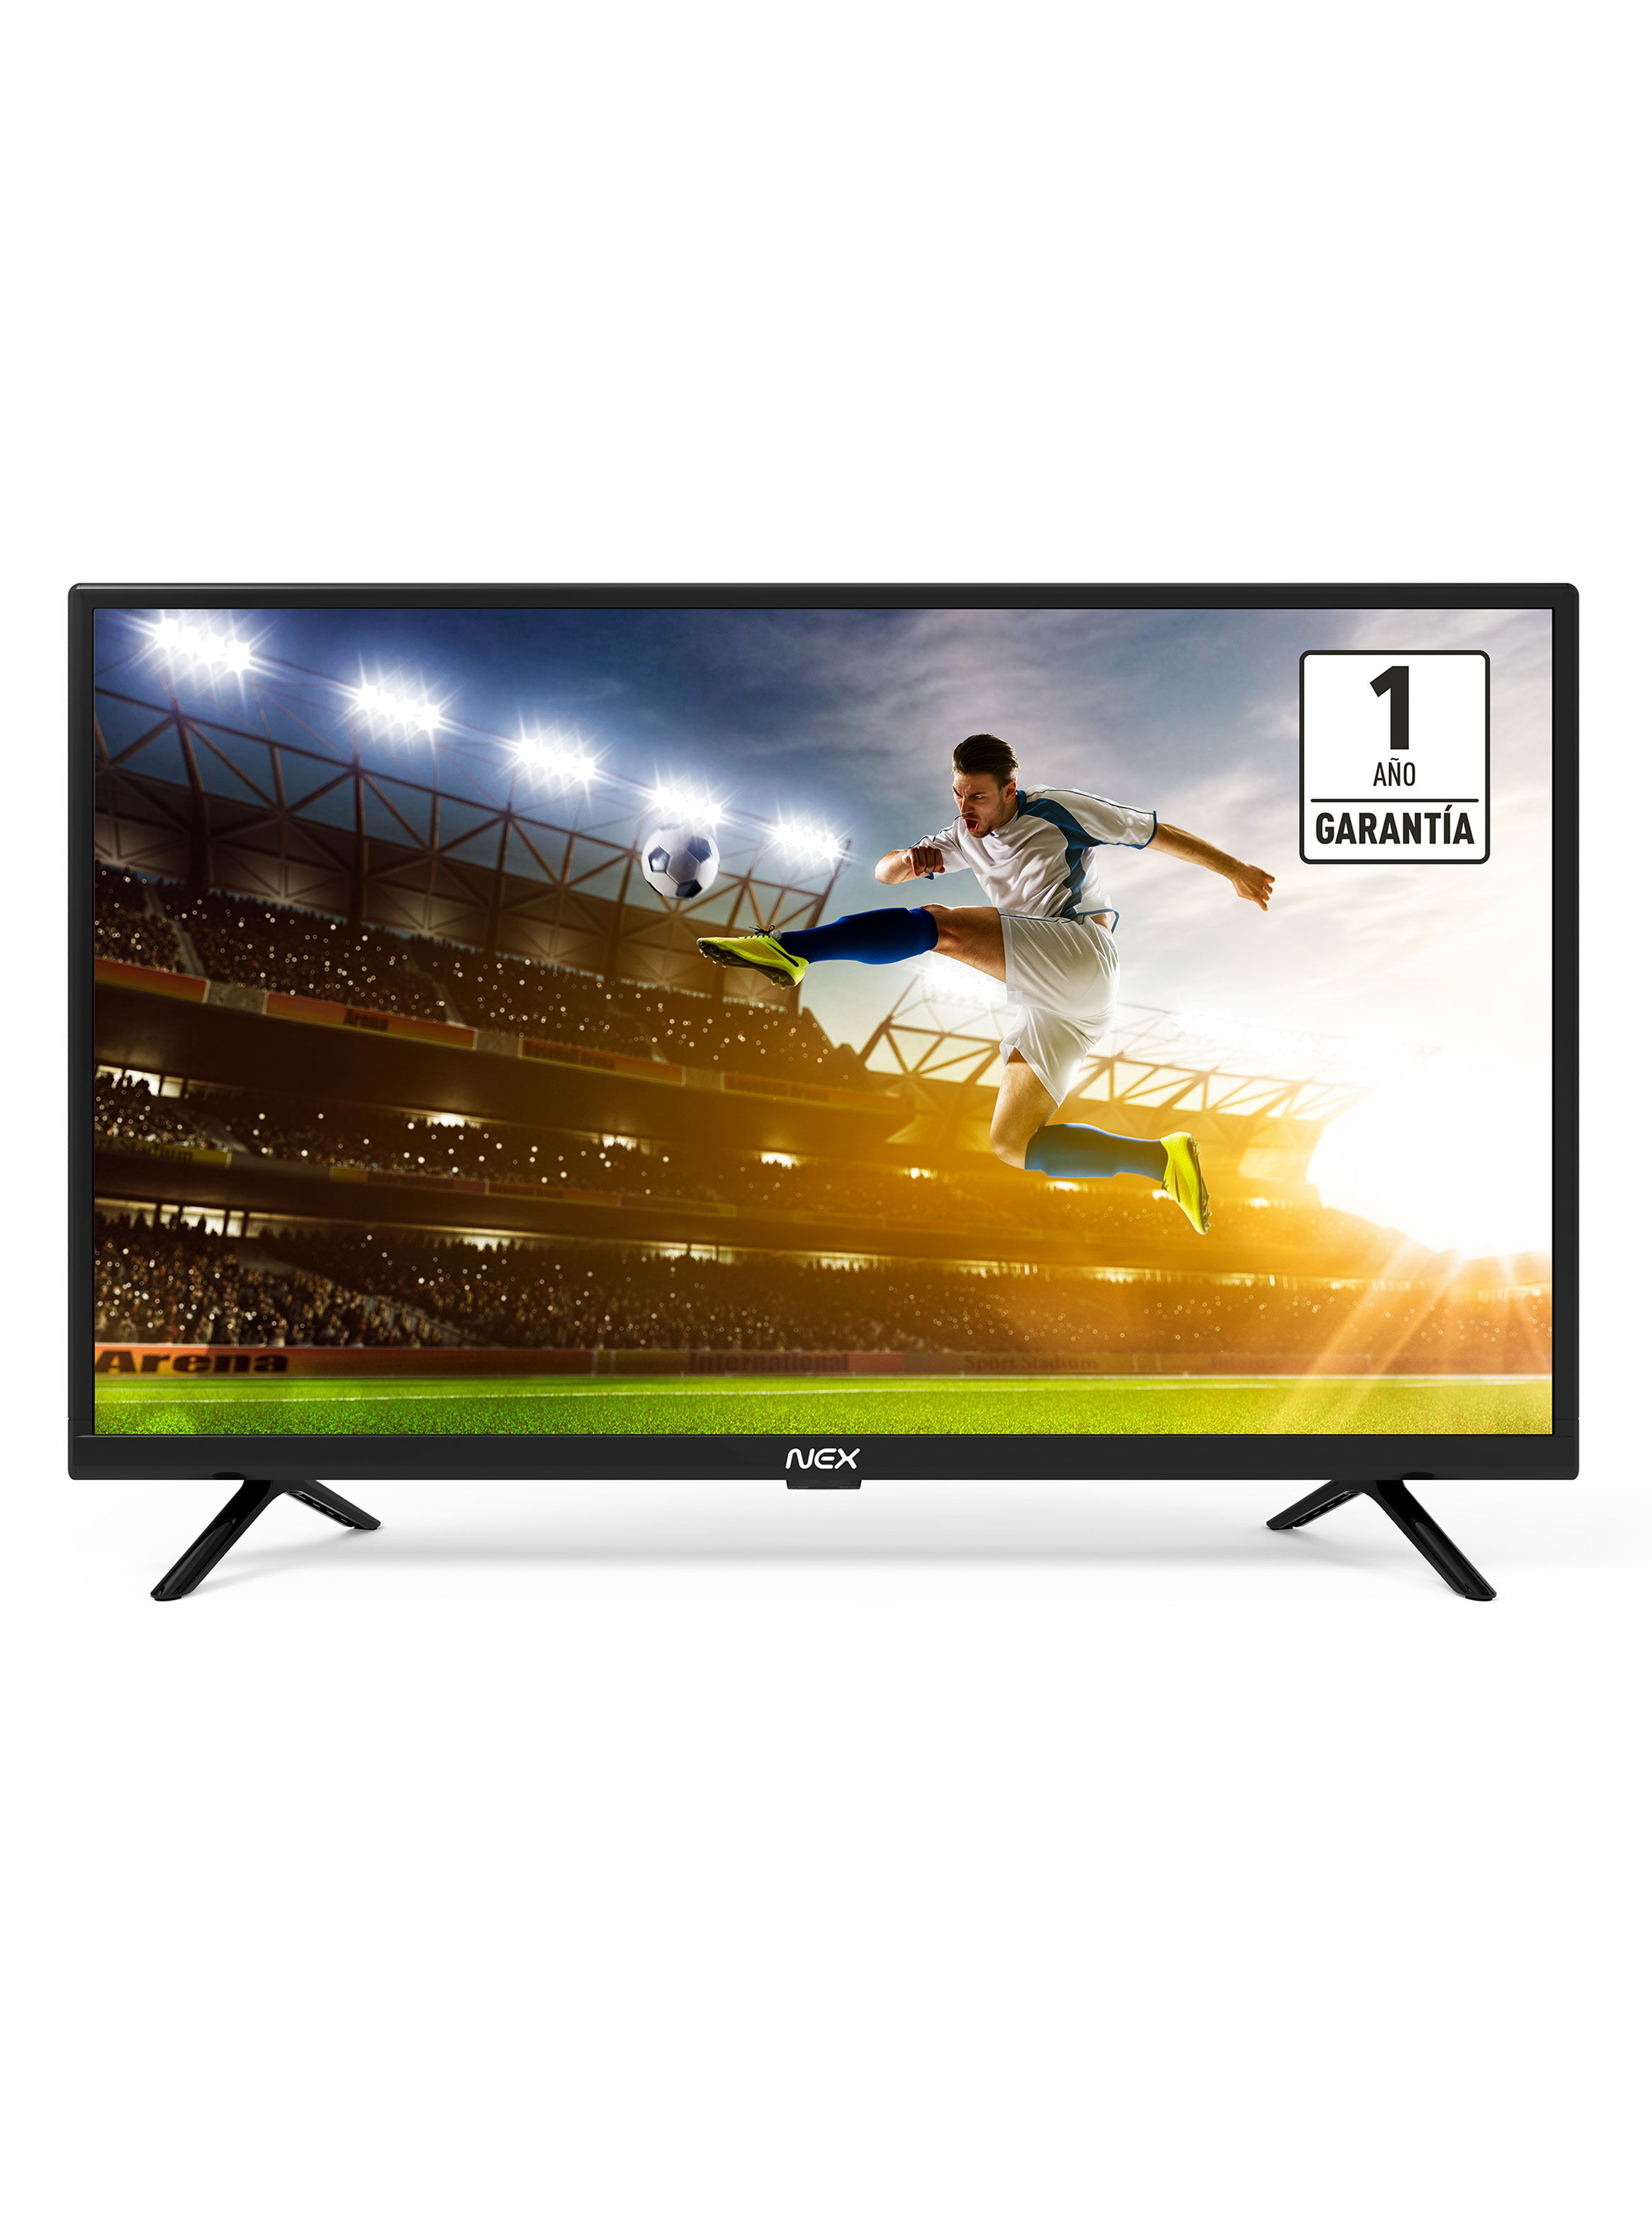 Pantalla RCA 22 Pulgadas LED Full HD Smart TV a precio de socio